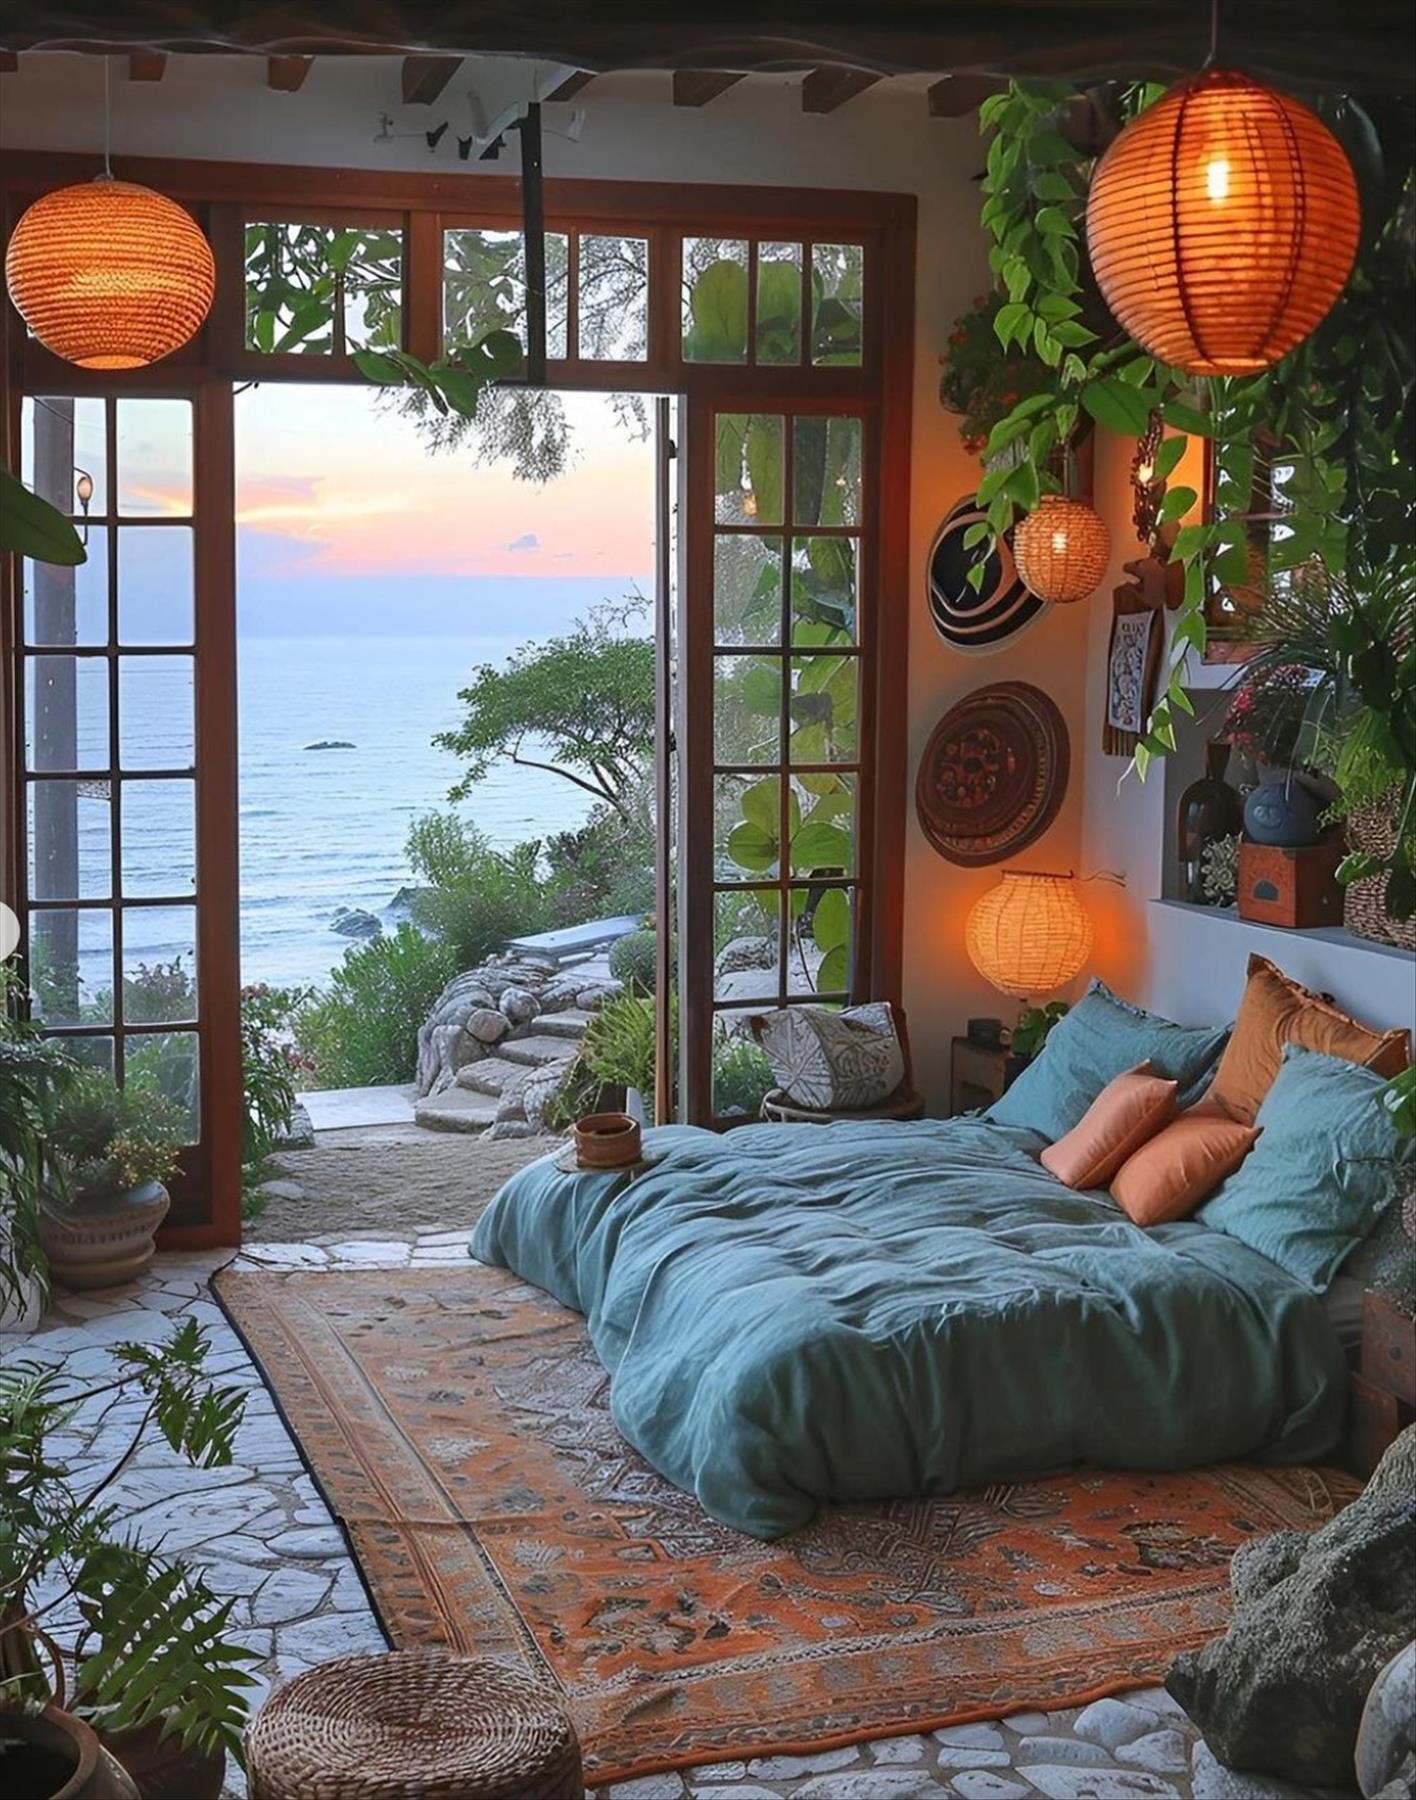 Cozy Summer bedroom decoration ideas to arrange now